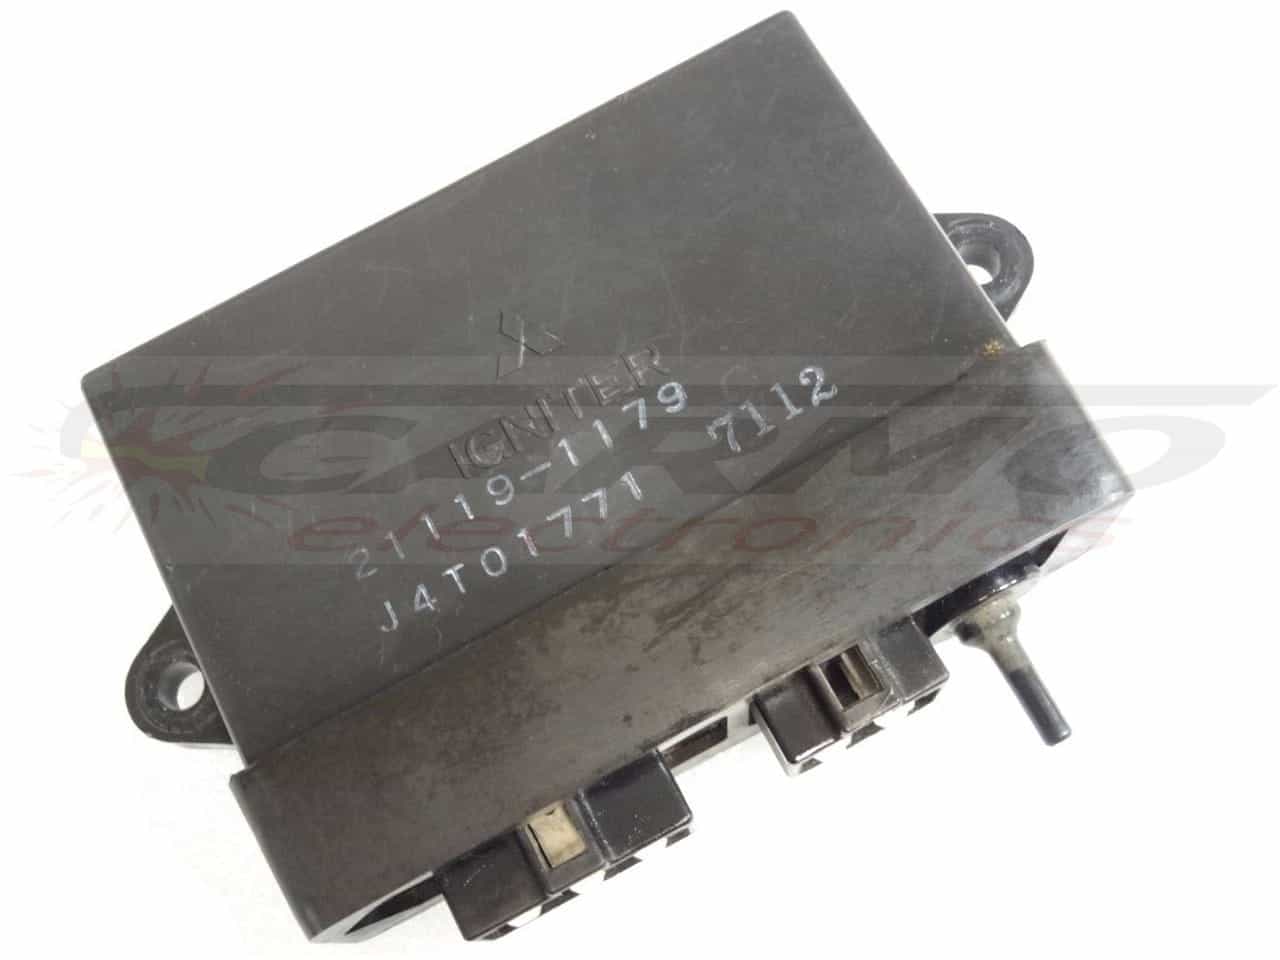 ZG1200 VOYAGER (21119-1179, J4T01771) CDI ECU igniter module black box